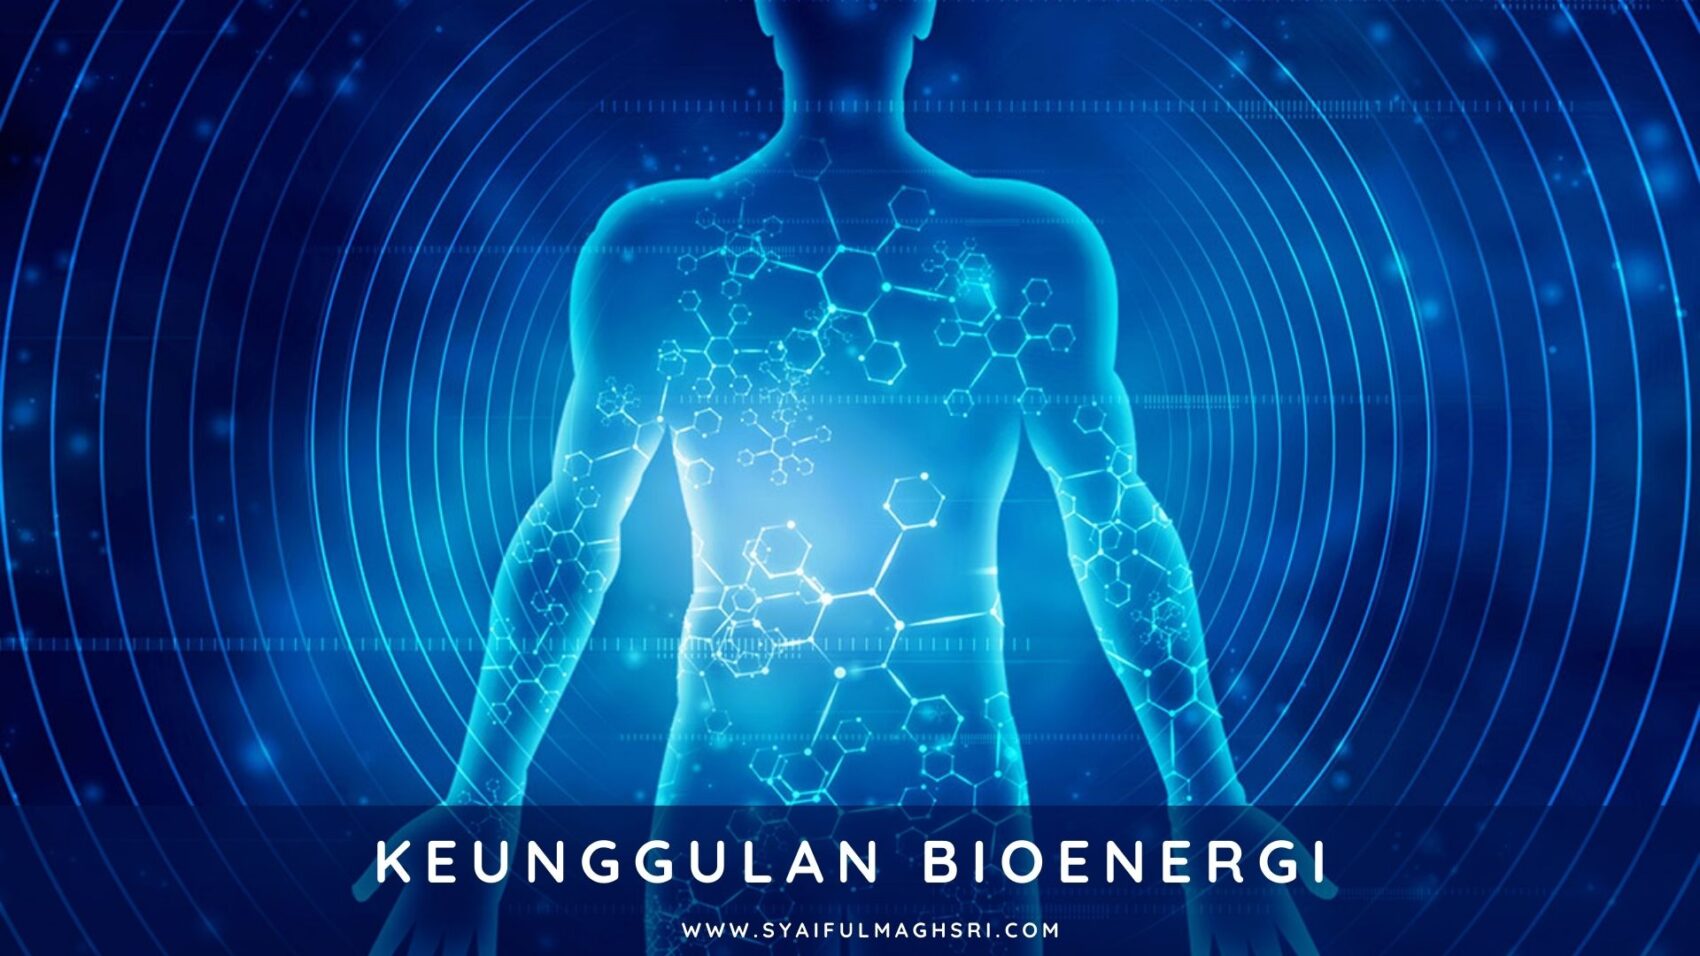 Keunggulan Bioenergi - Syaiful Maghsri.com